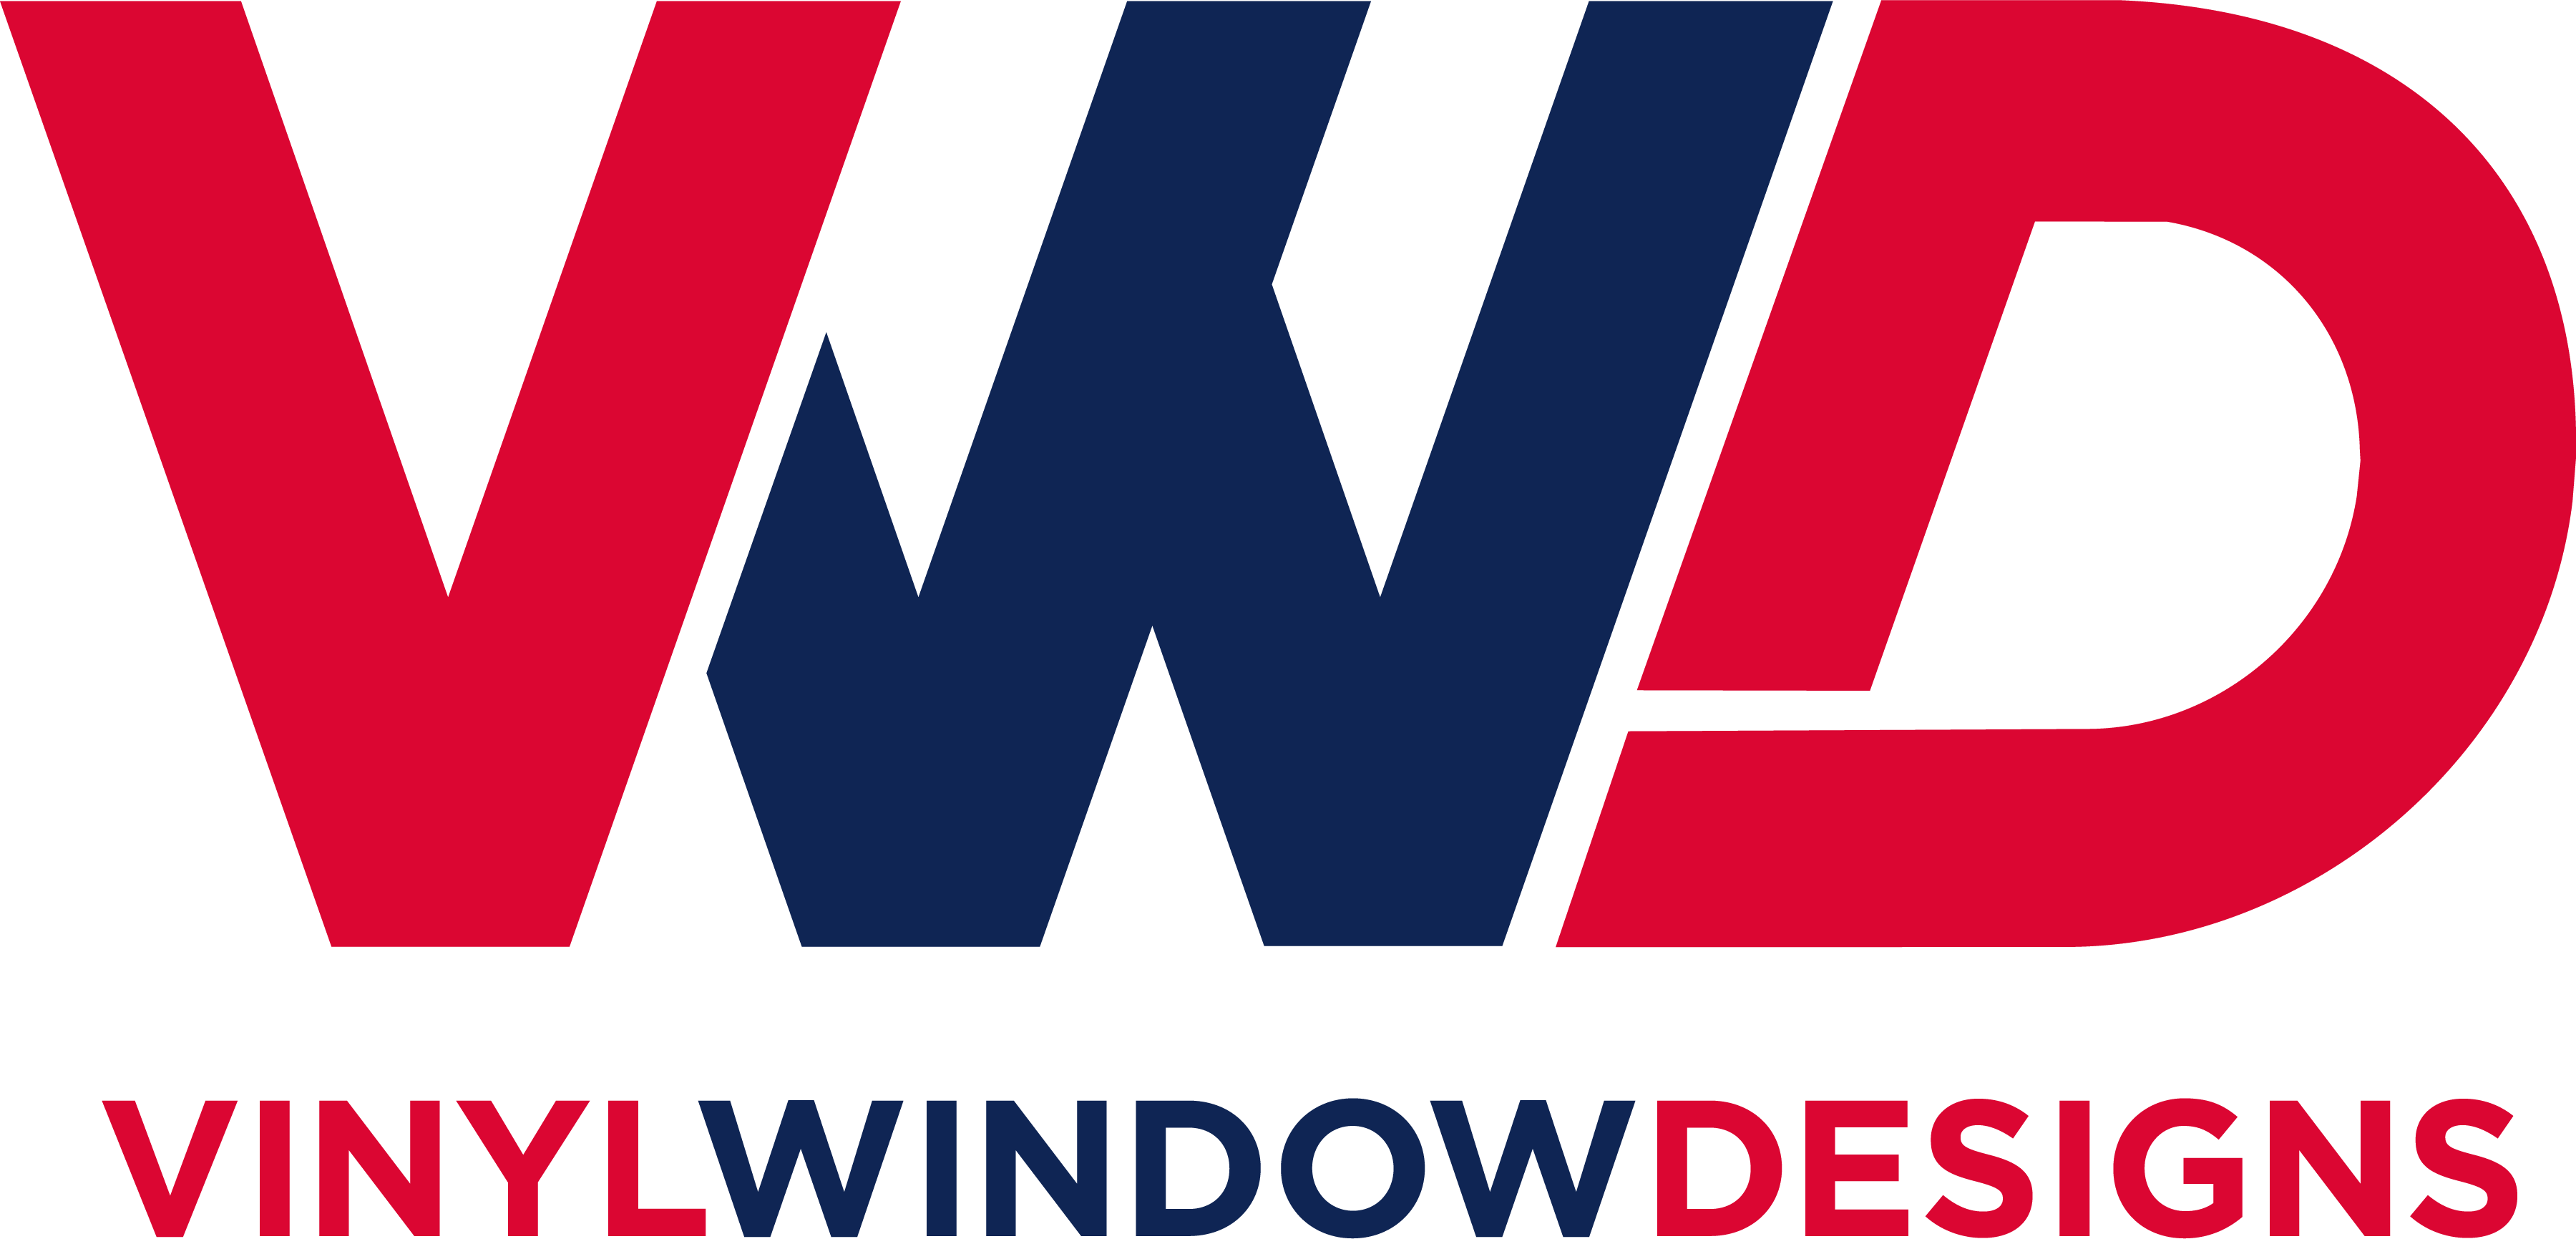 Vinyl Window Designs Ltd's logo